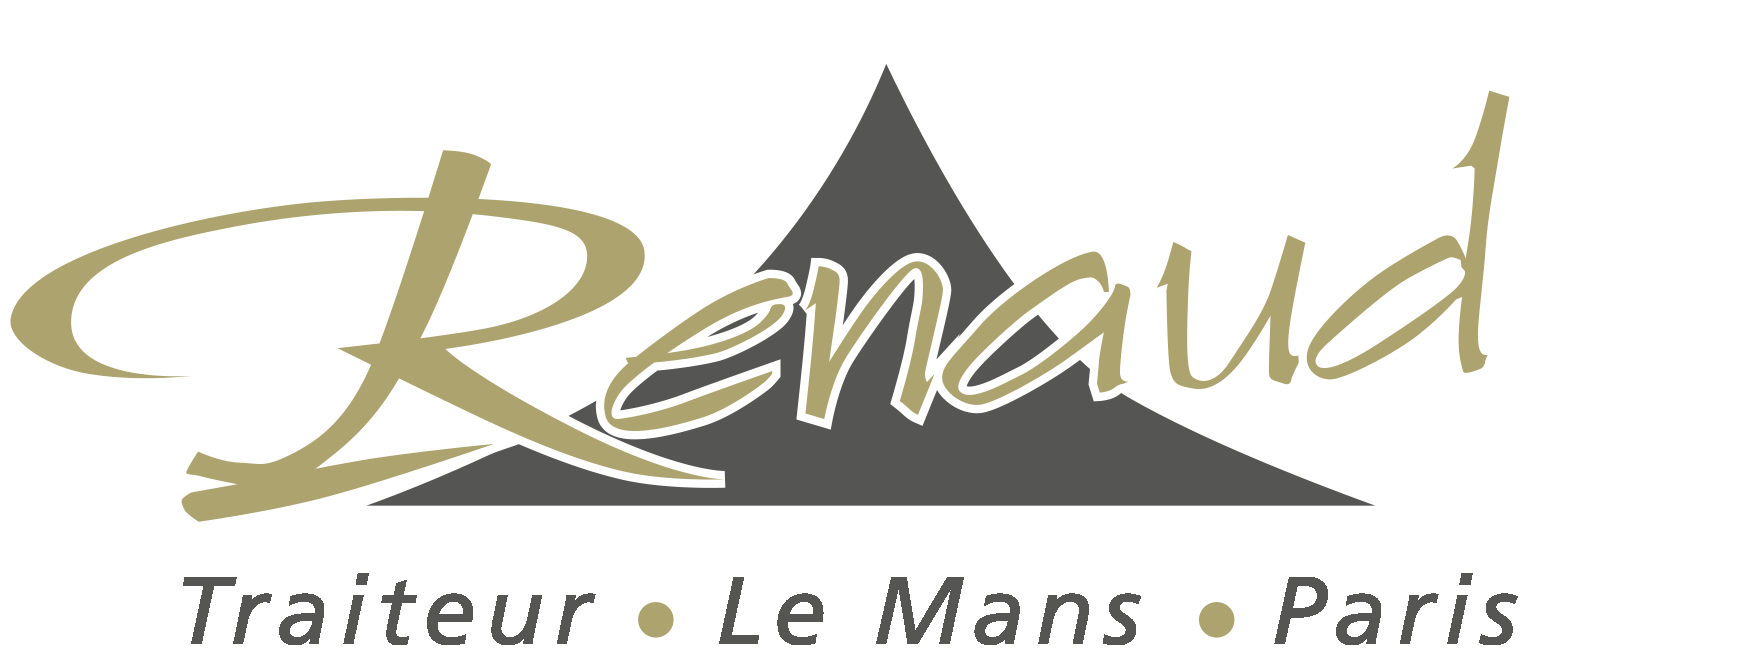 logo-renaud-traiteur